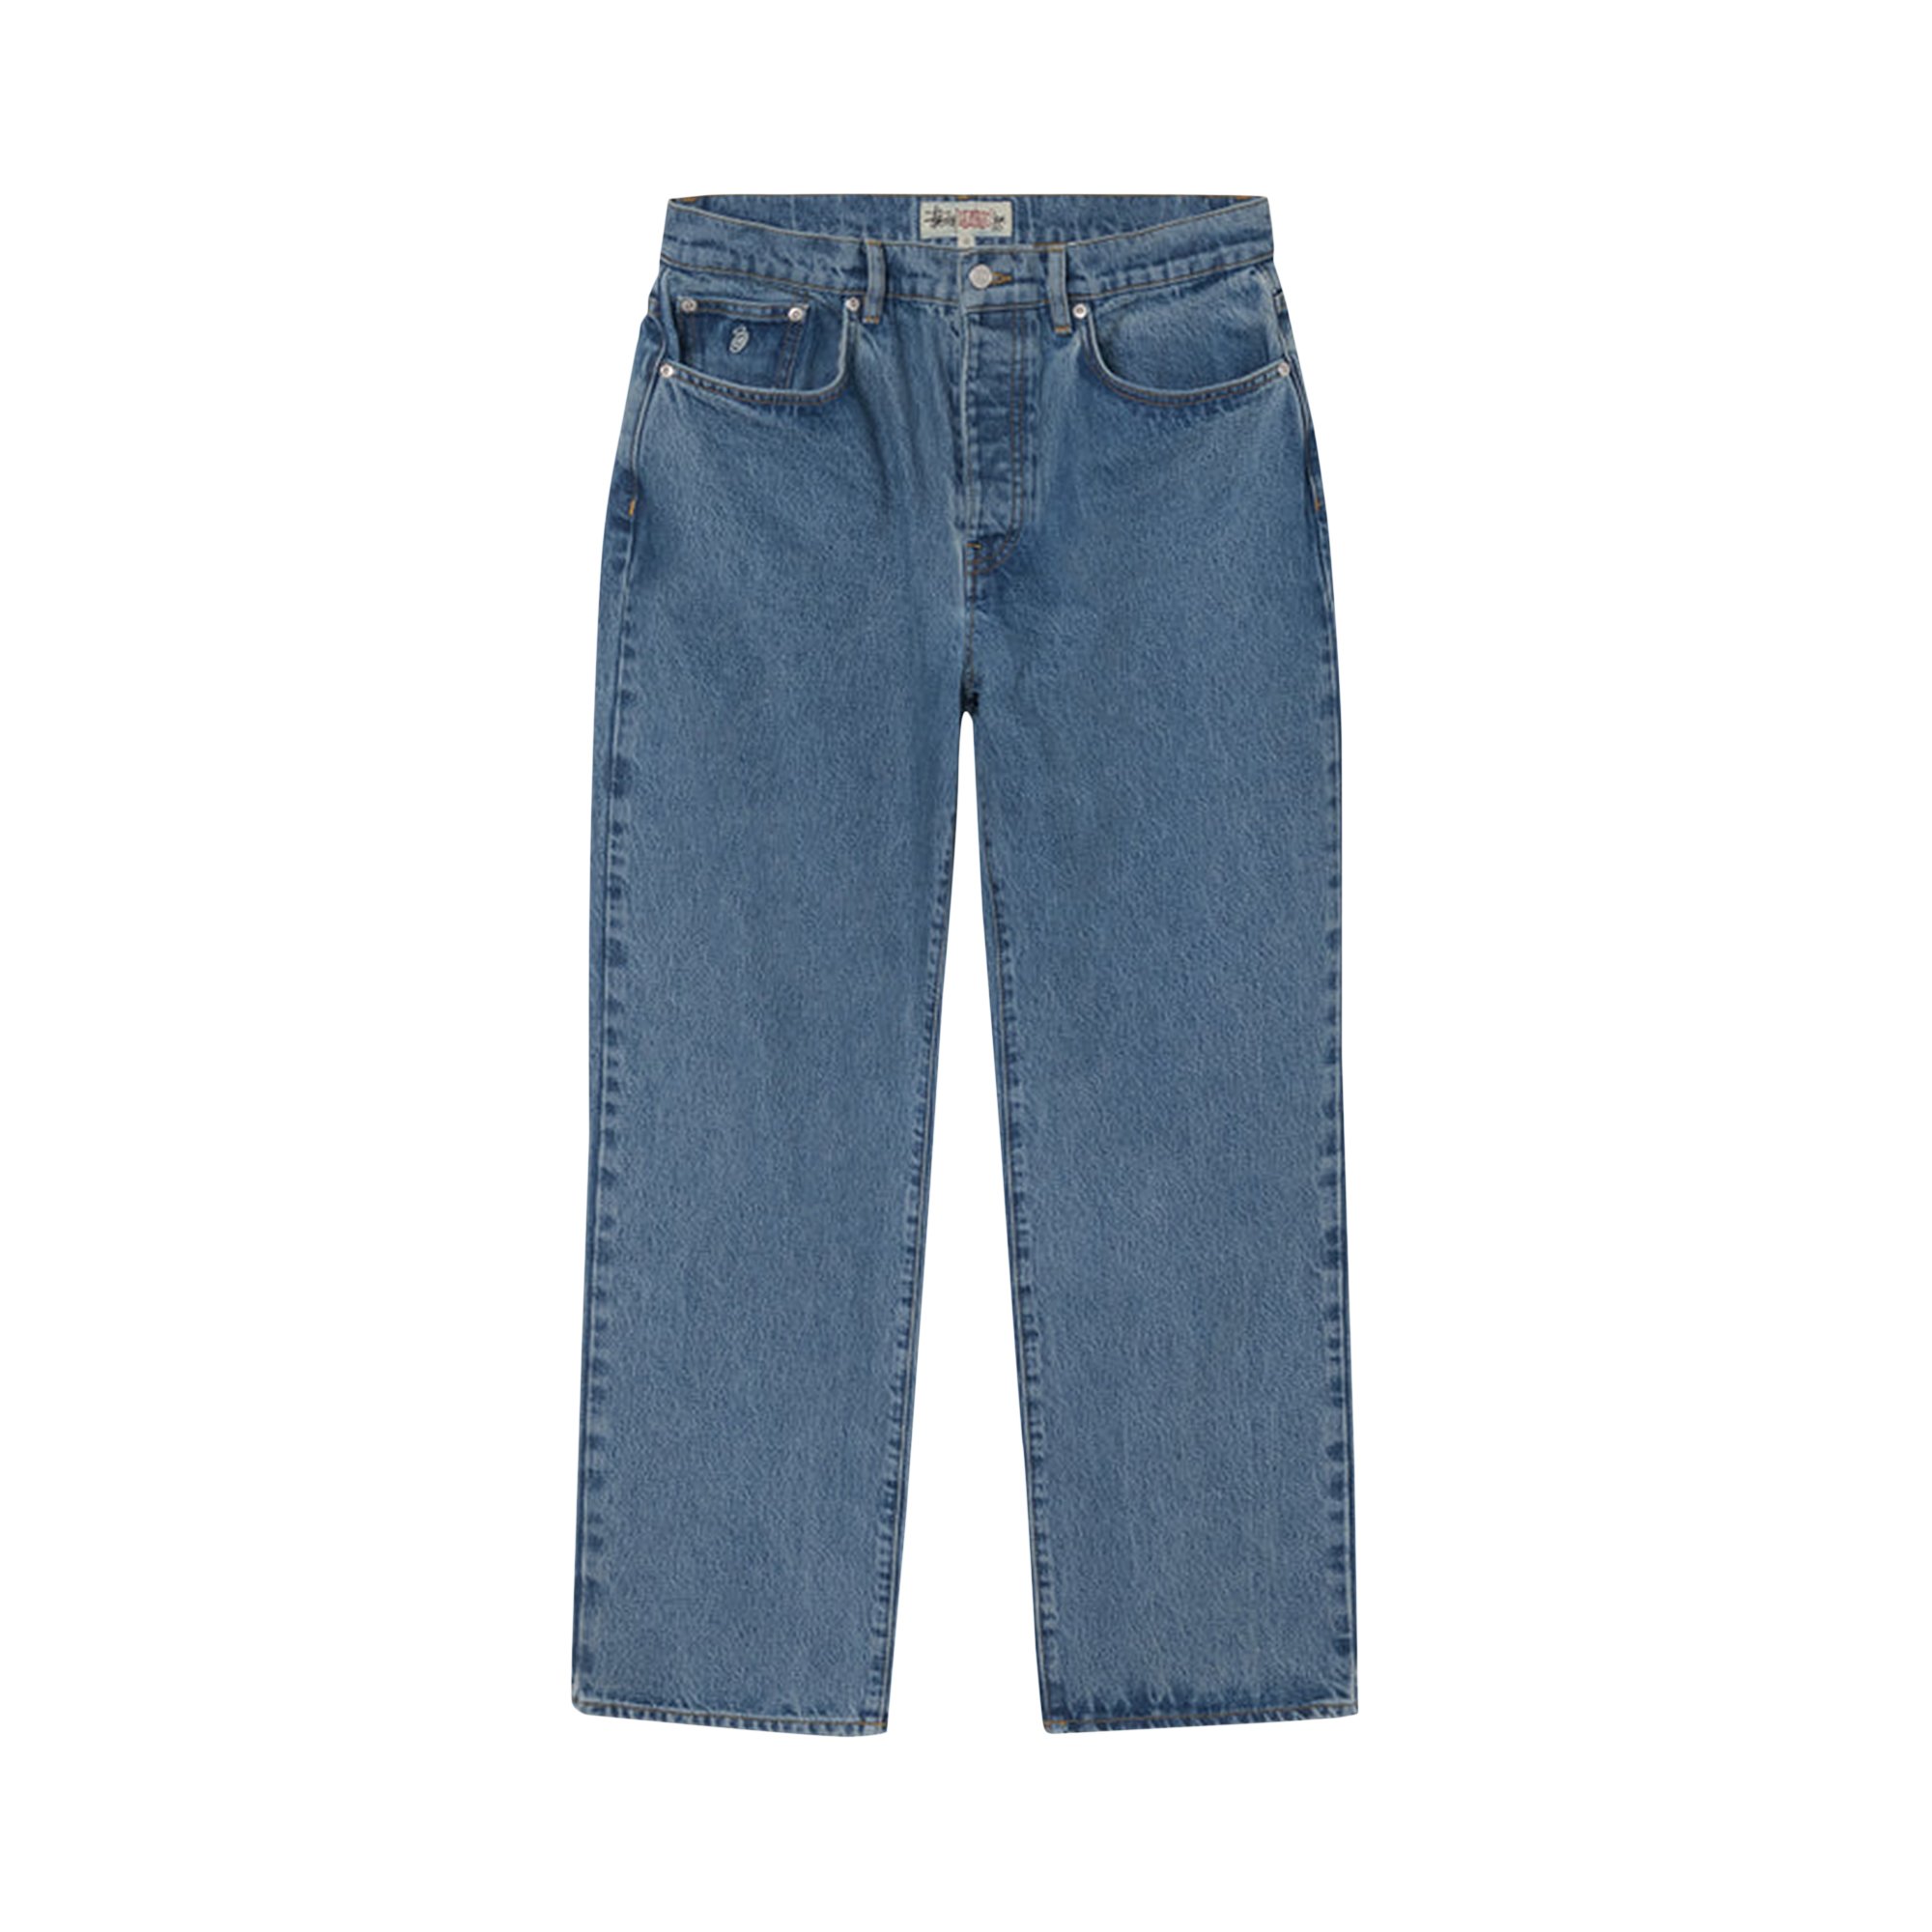 Buy Stussy Denim Classic Jean 'Washed Blue' - 116601 WASH | GOAT